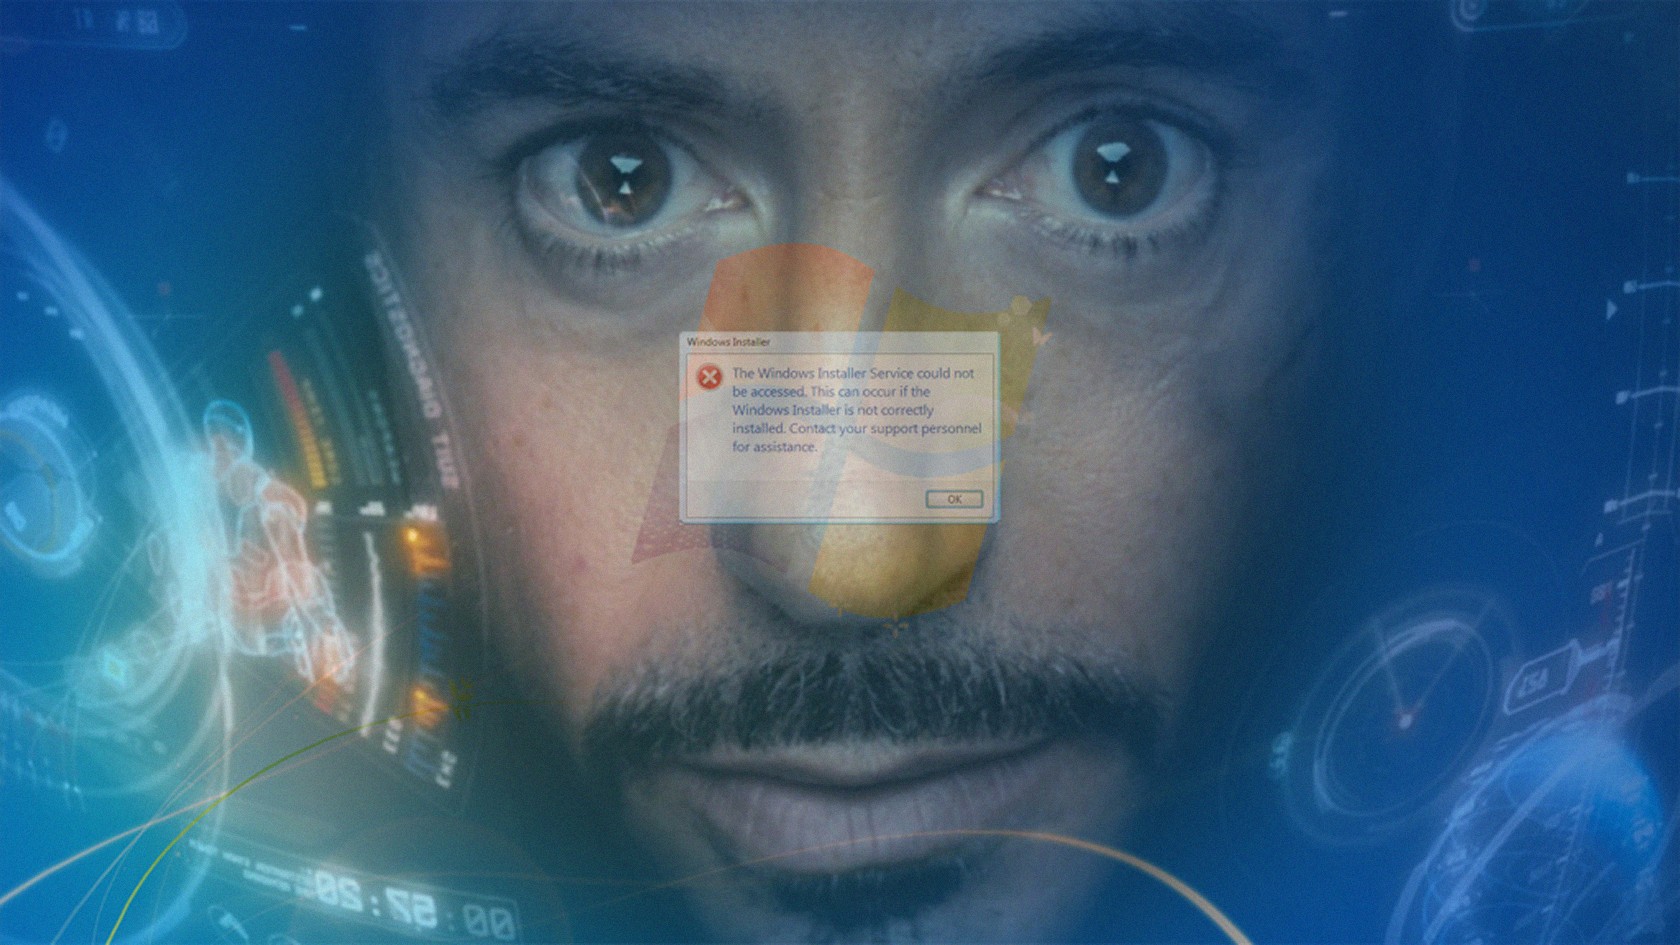 Iron Man Operating System Errors Windows 7 Humor Movies Marvel Cinematic Universe Robert Downey Jr M 1680x945